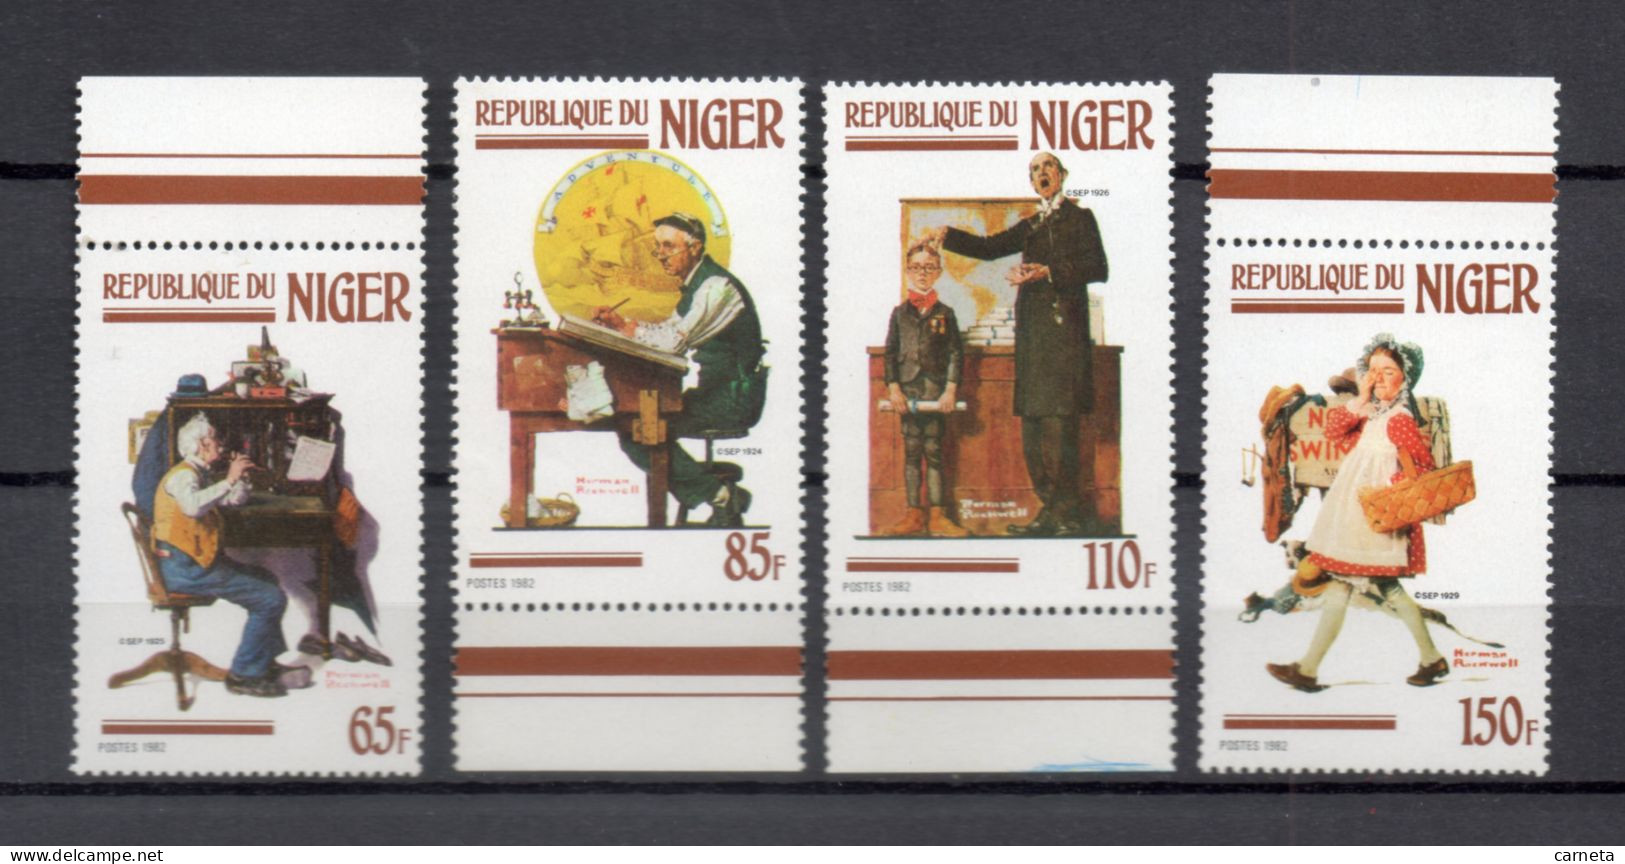 NIGER  N° 587 à 590   NEUFS SANS CHARNIERE  COTE 5.50€     ROCKWELL PEINTRE ILLUSTRATEUR - Niger (1960-...)